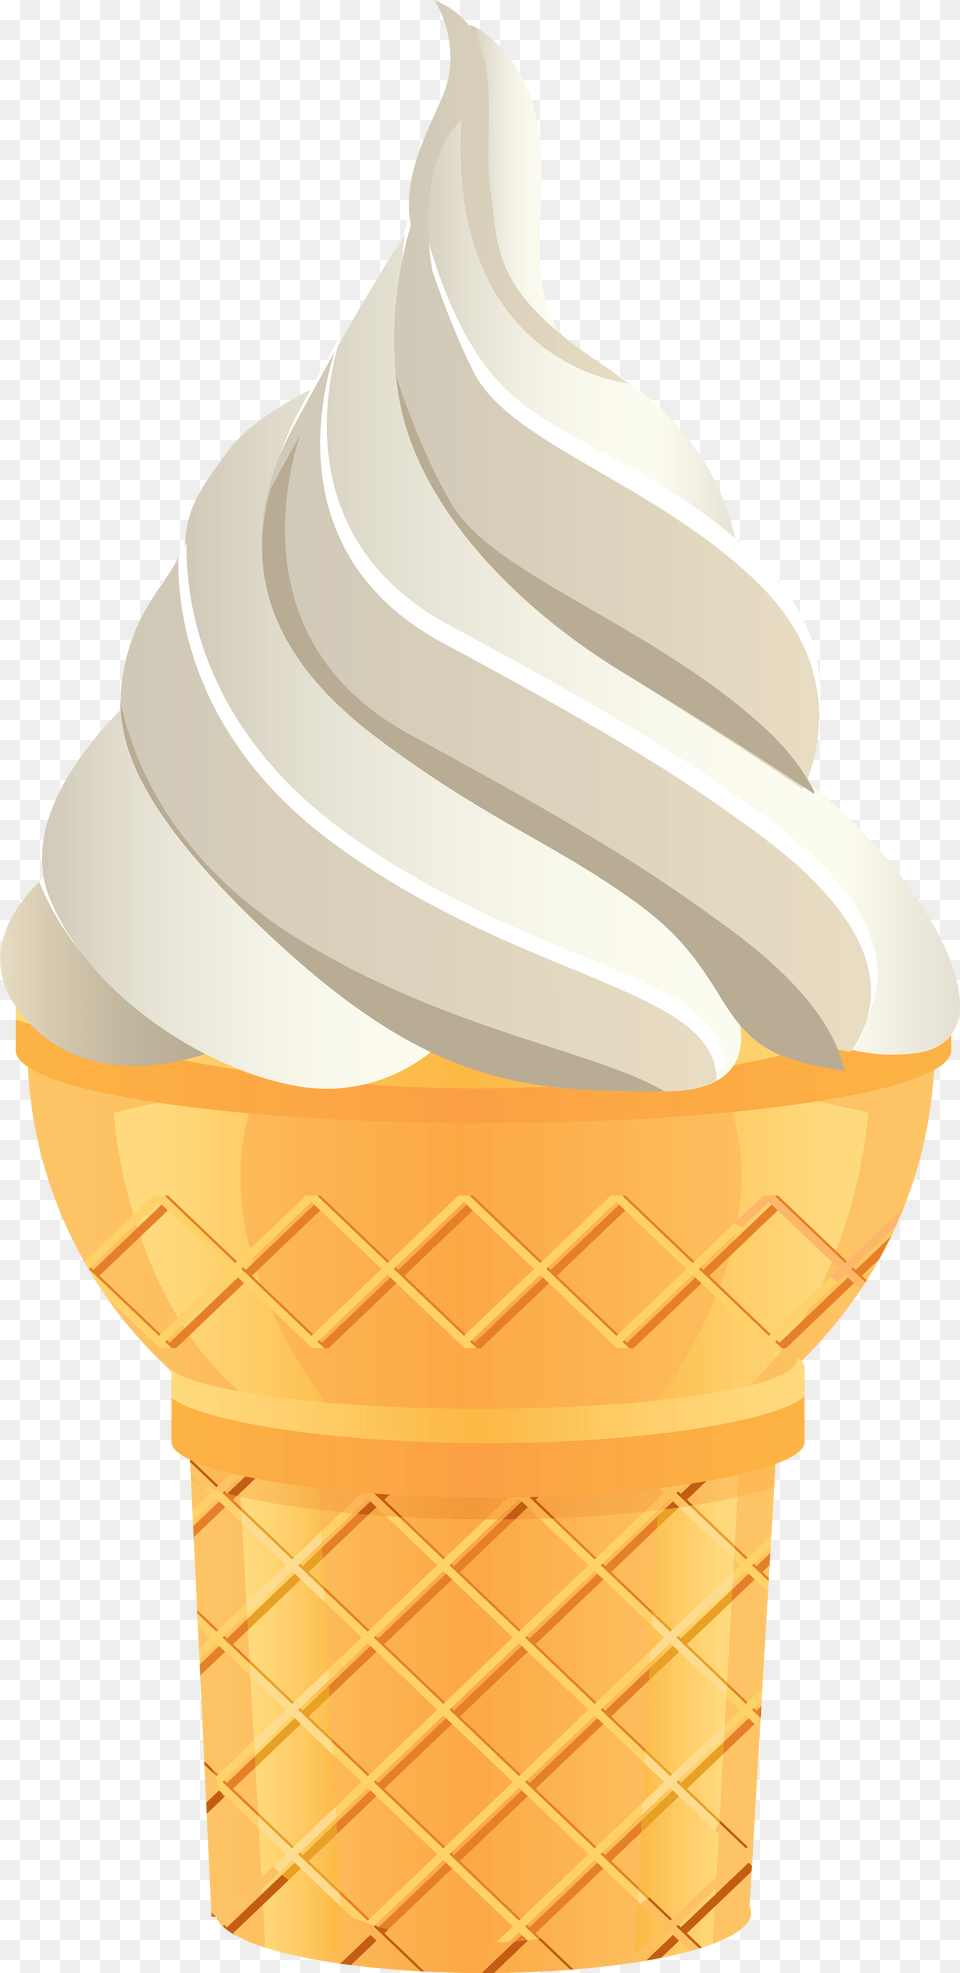 Ice Cream Cone Flavor Cup Ice Cream Transparent Background Clipart, Dessert, Food, Ice Cream, Soft Serve Ice Cream Png